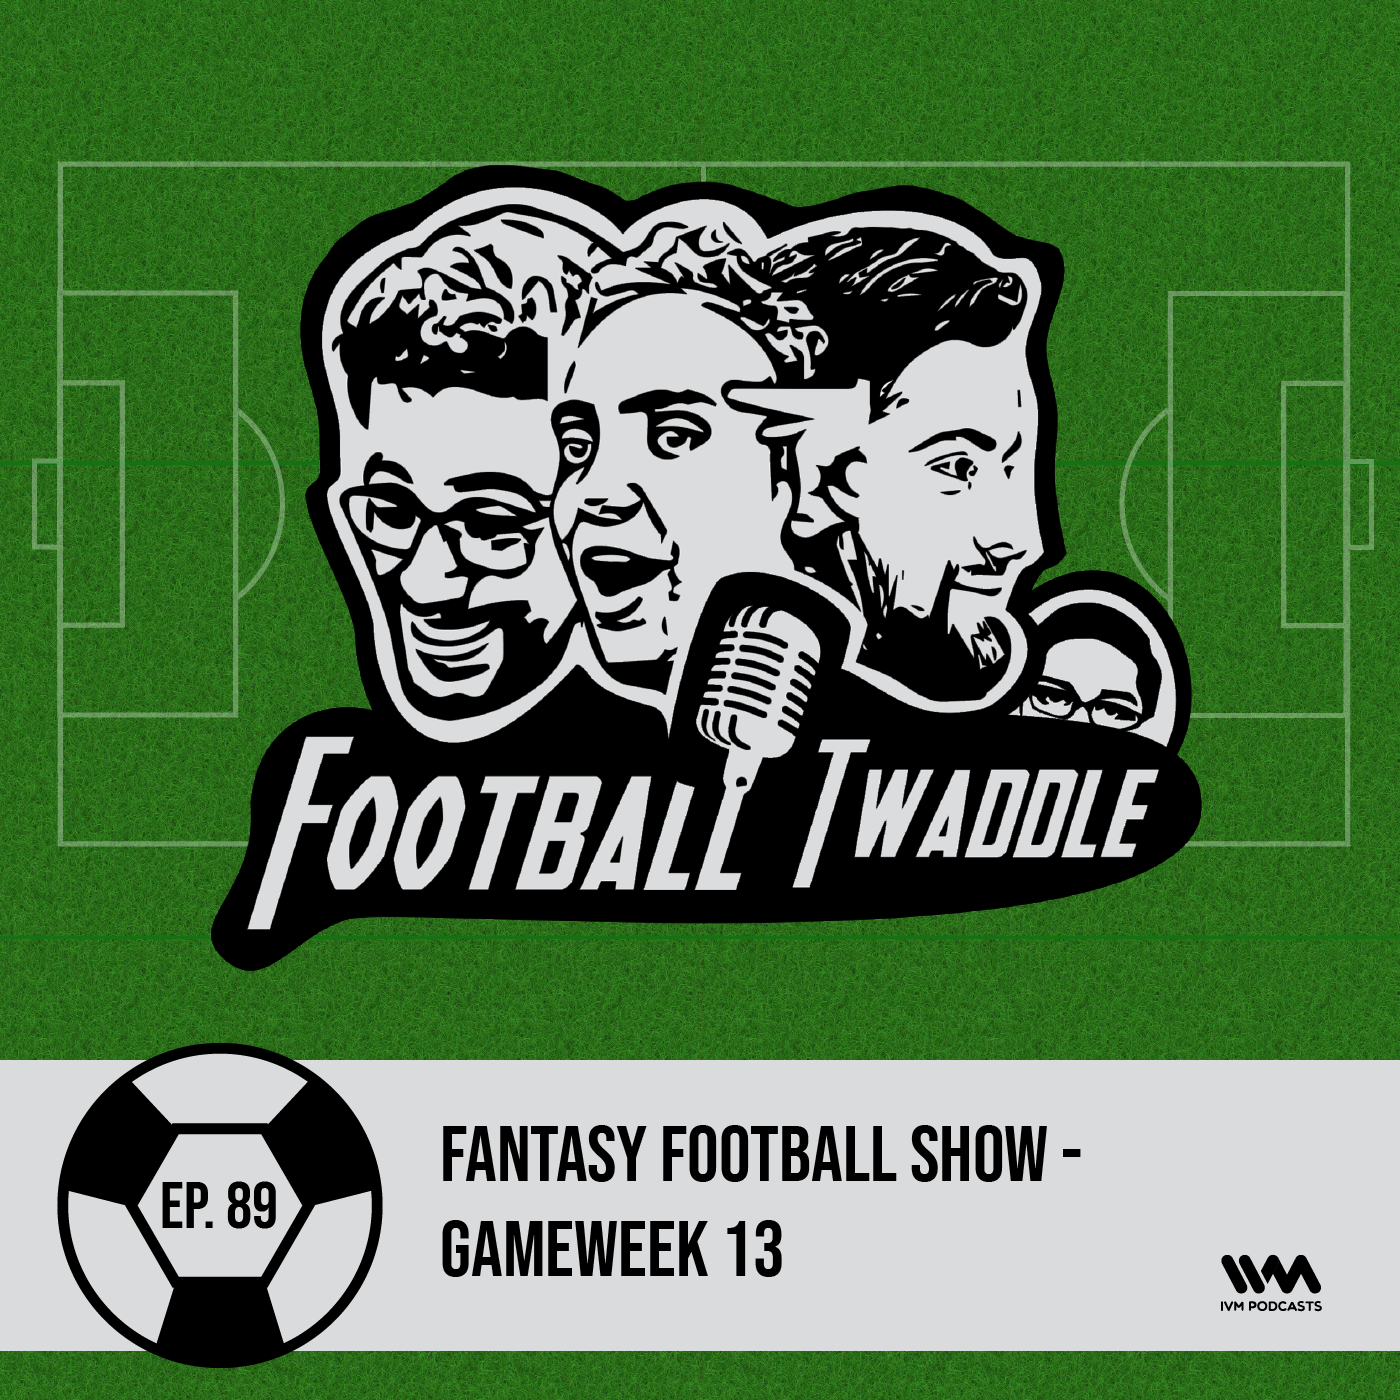 Fantasy Football Show - Gameweek 13